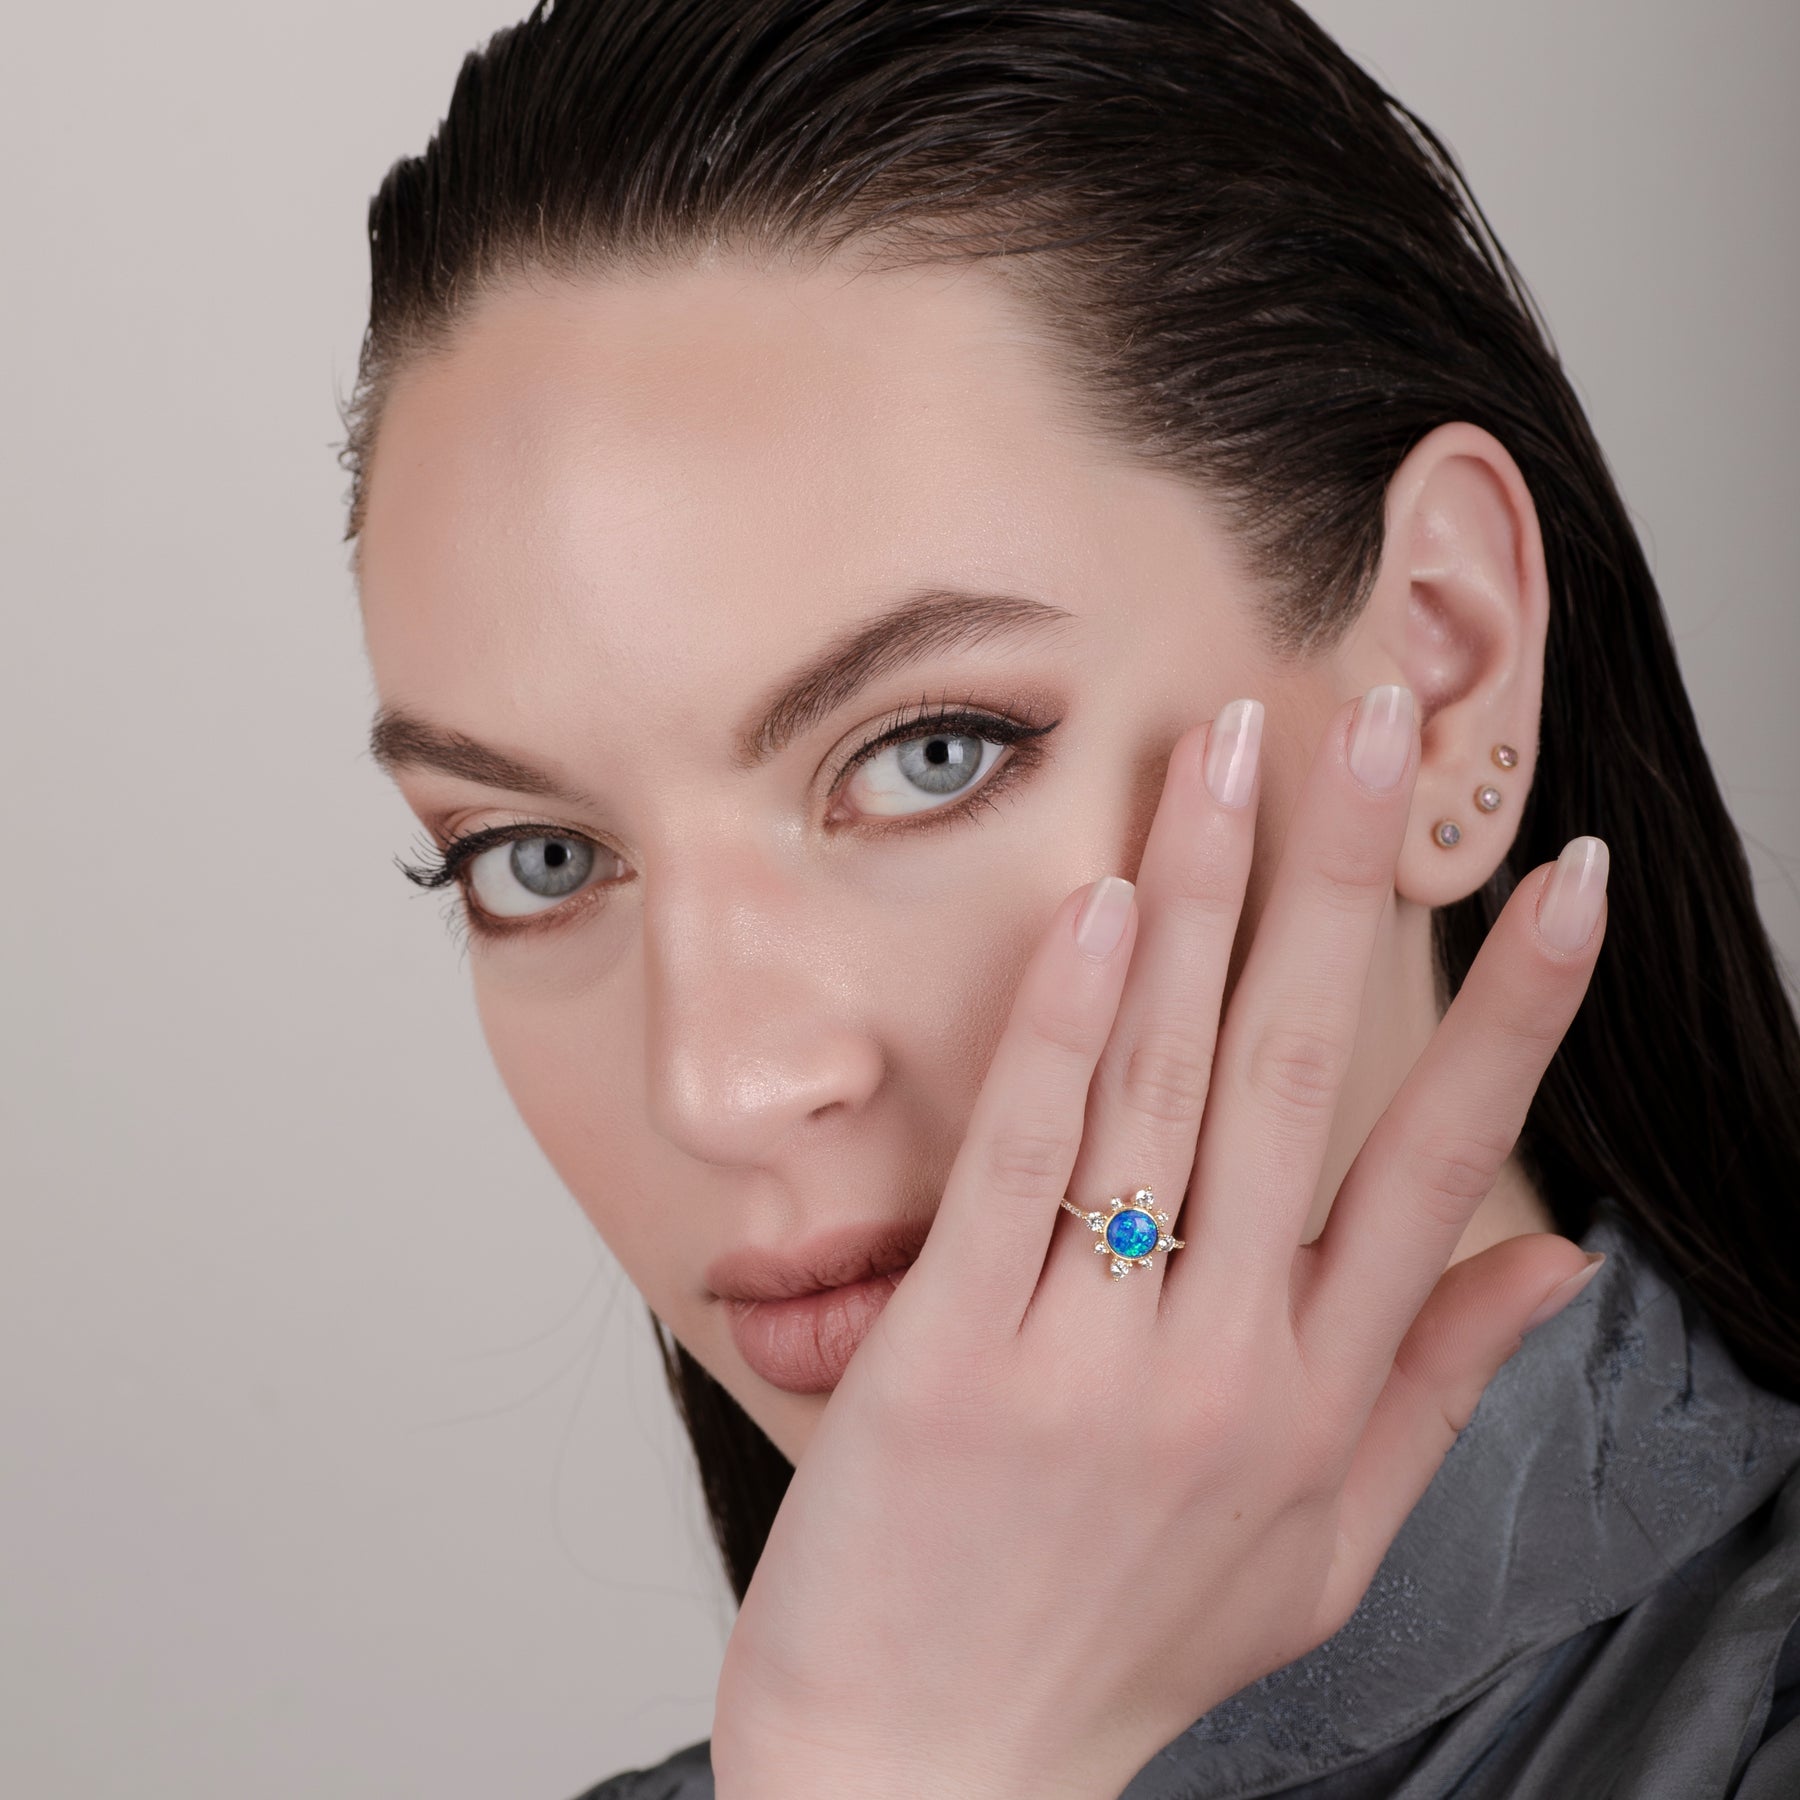 Sunshine Blue Opal 24K Gold Ring - Gold Vermeil Ring - Pretland | Spiritual Crystals & Jewelry